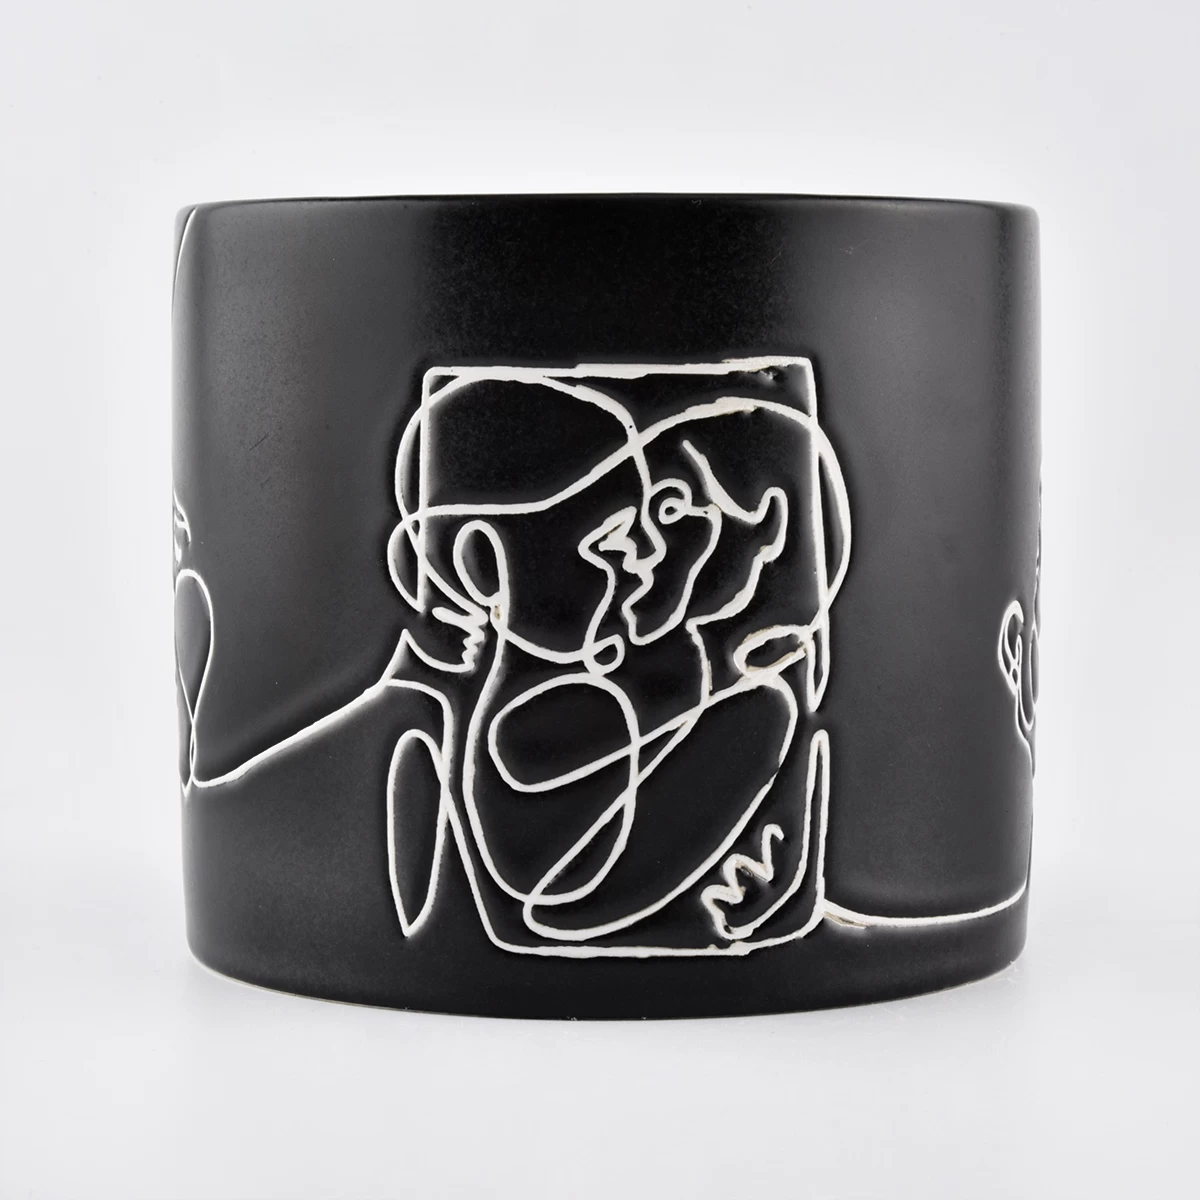 ceramic candle jars with debossing designs